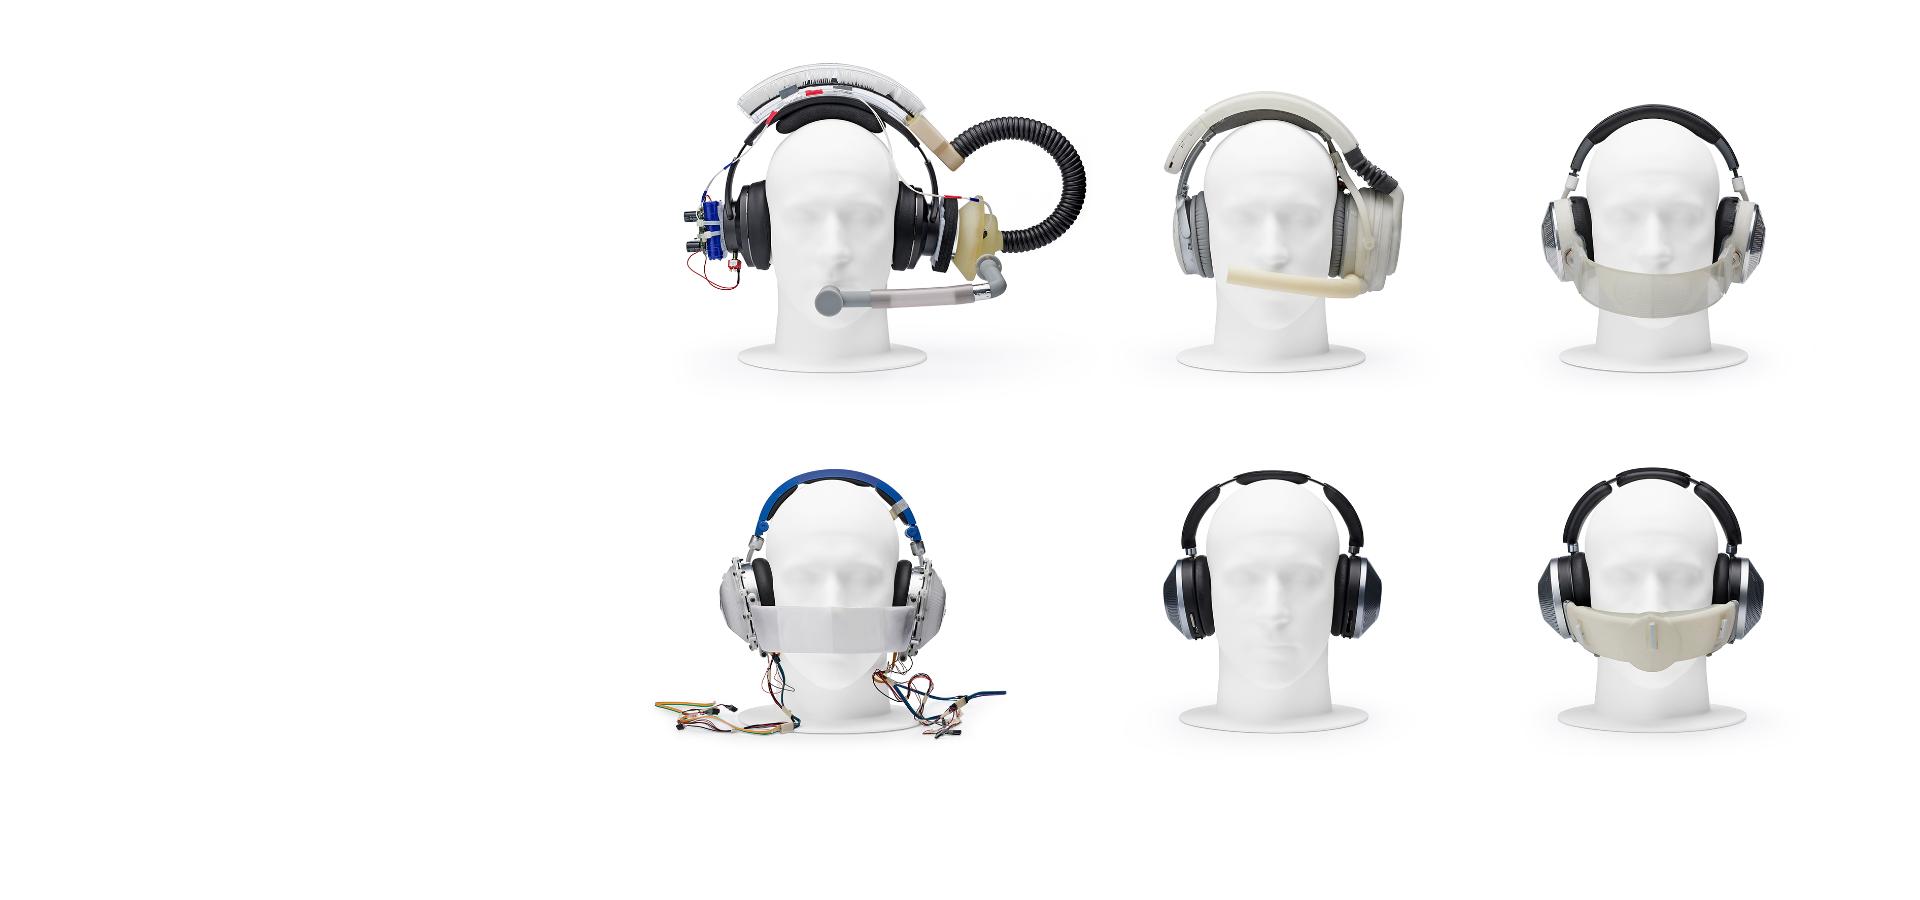 Four Mannequin heads wearing various prototype headphones